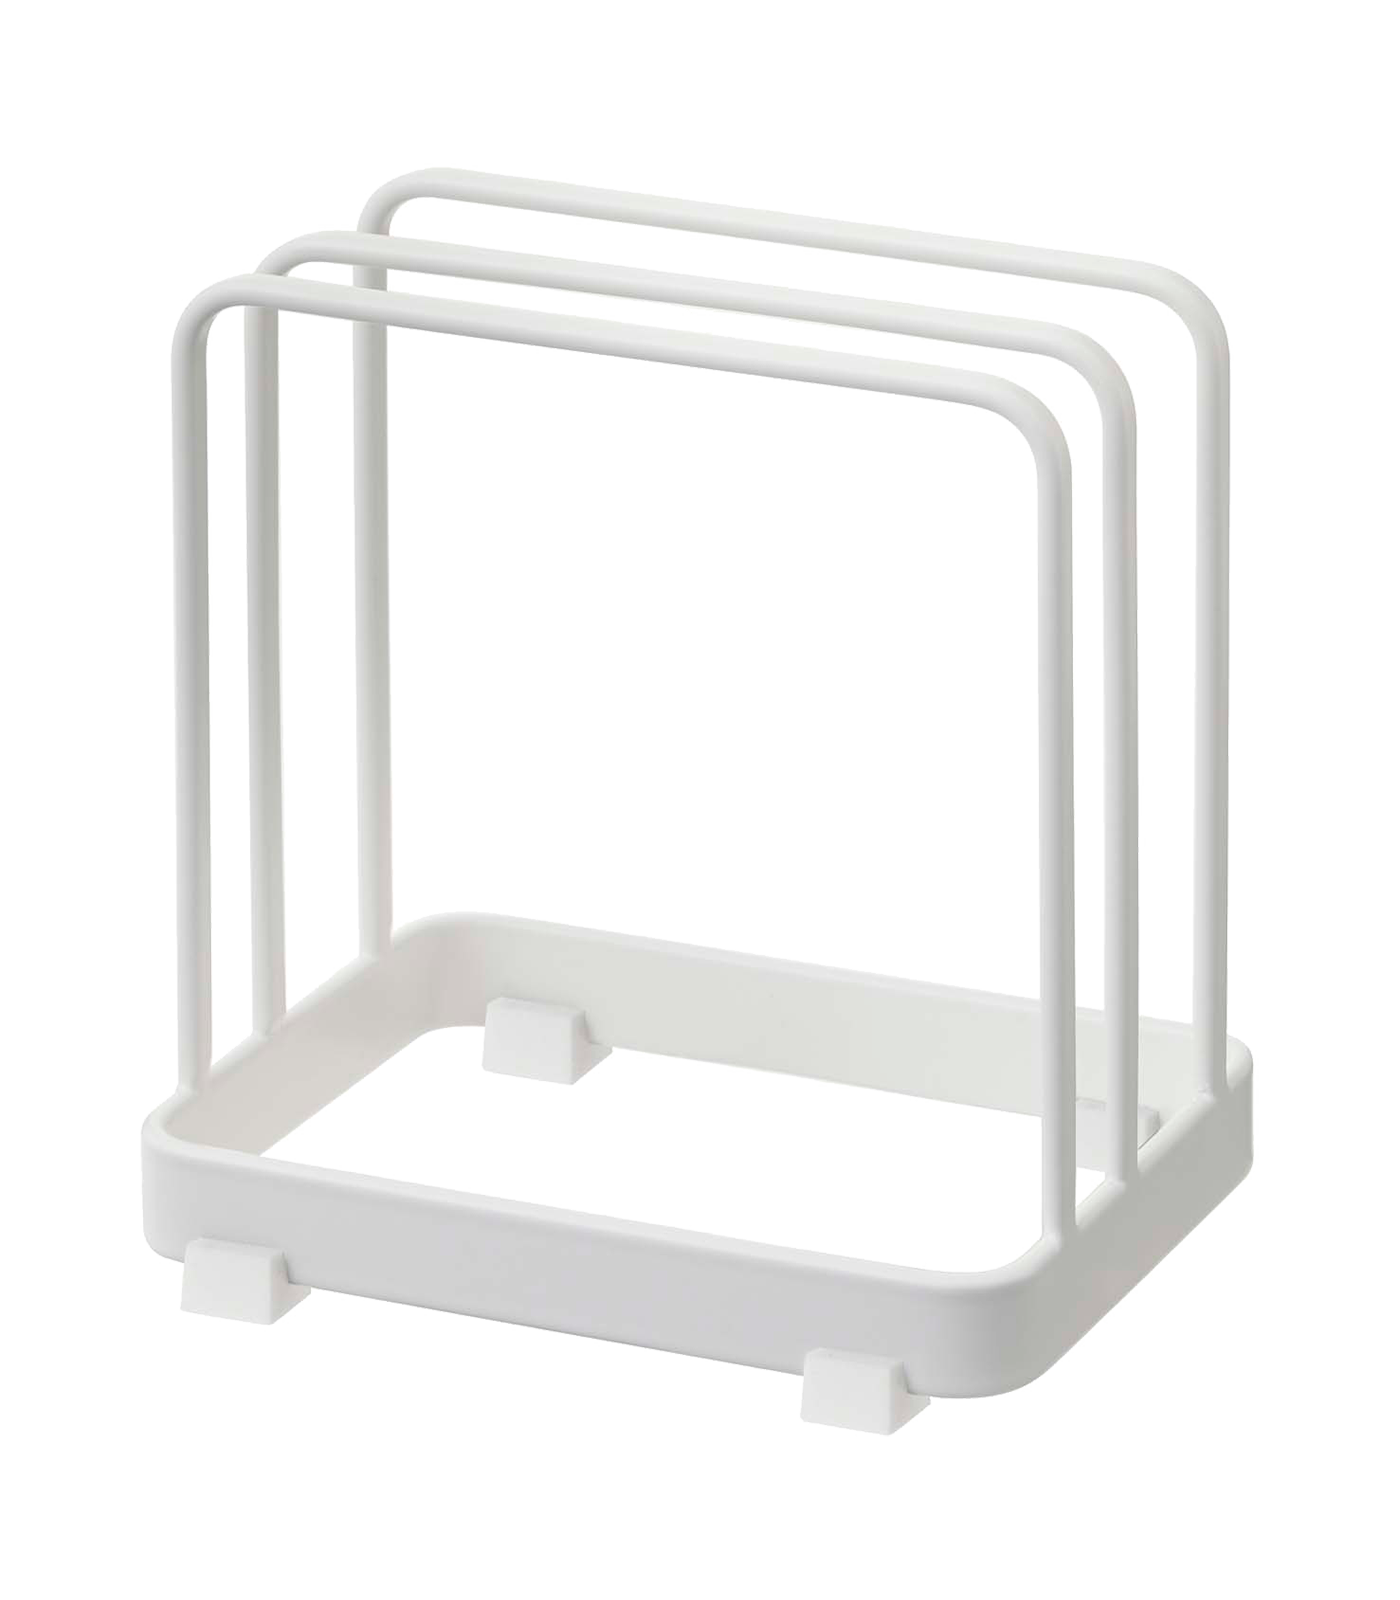 Plate Cutting Board Stand - Steel